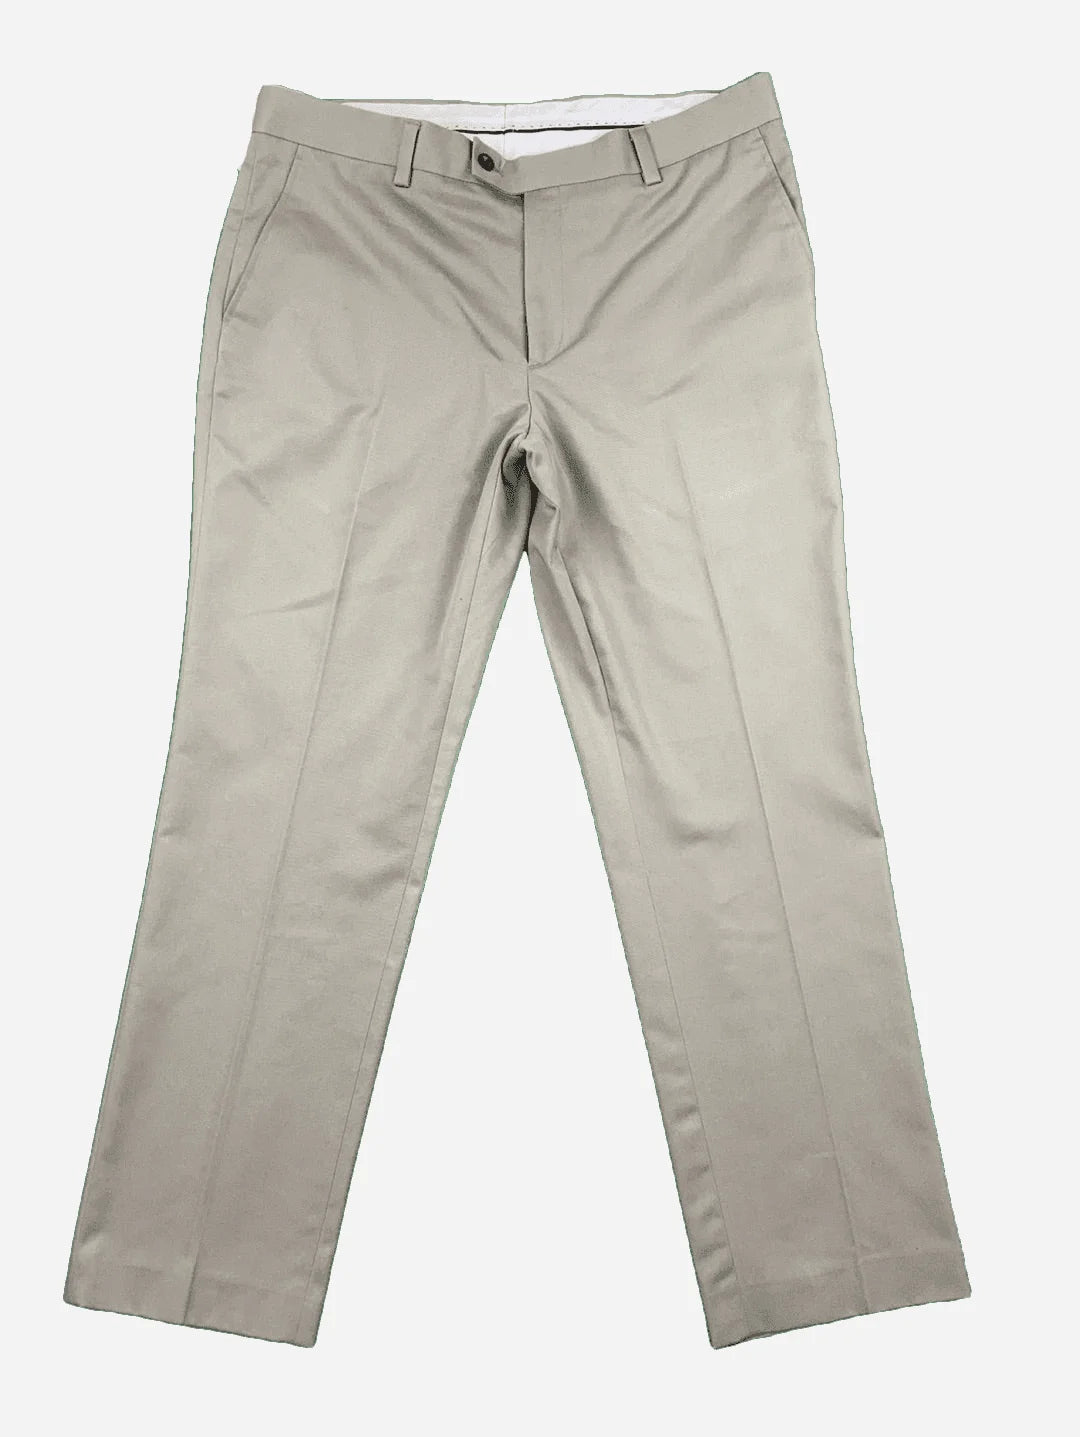 Dressman trousers 34/30 (M)